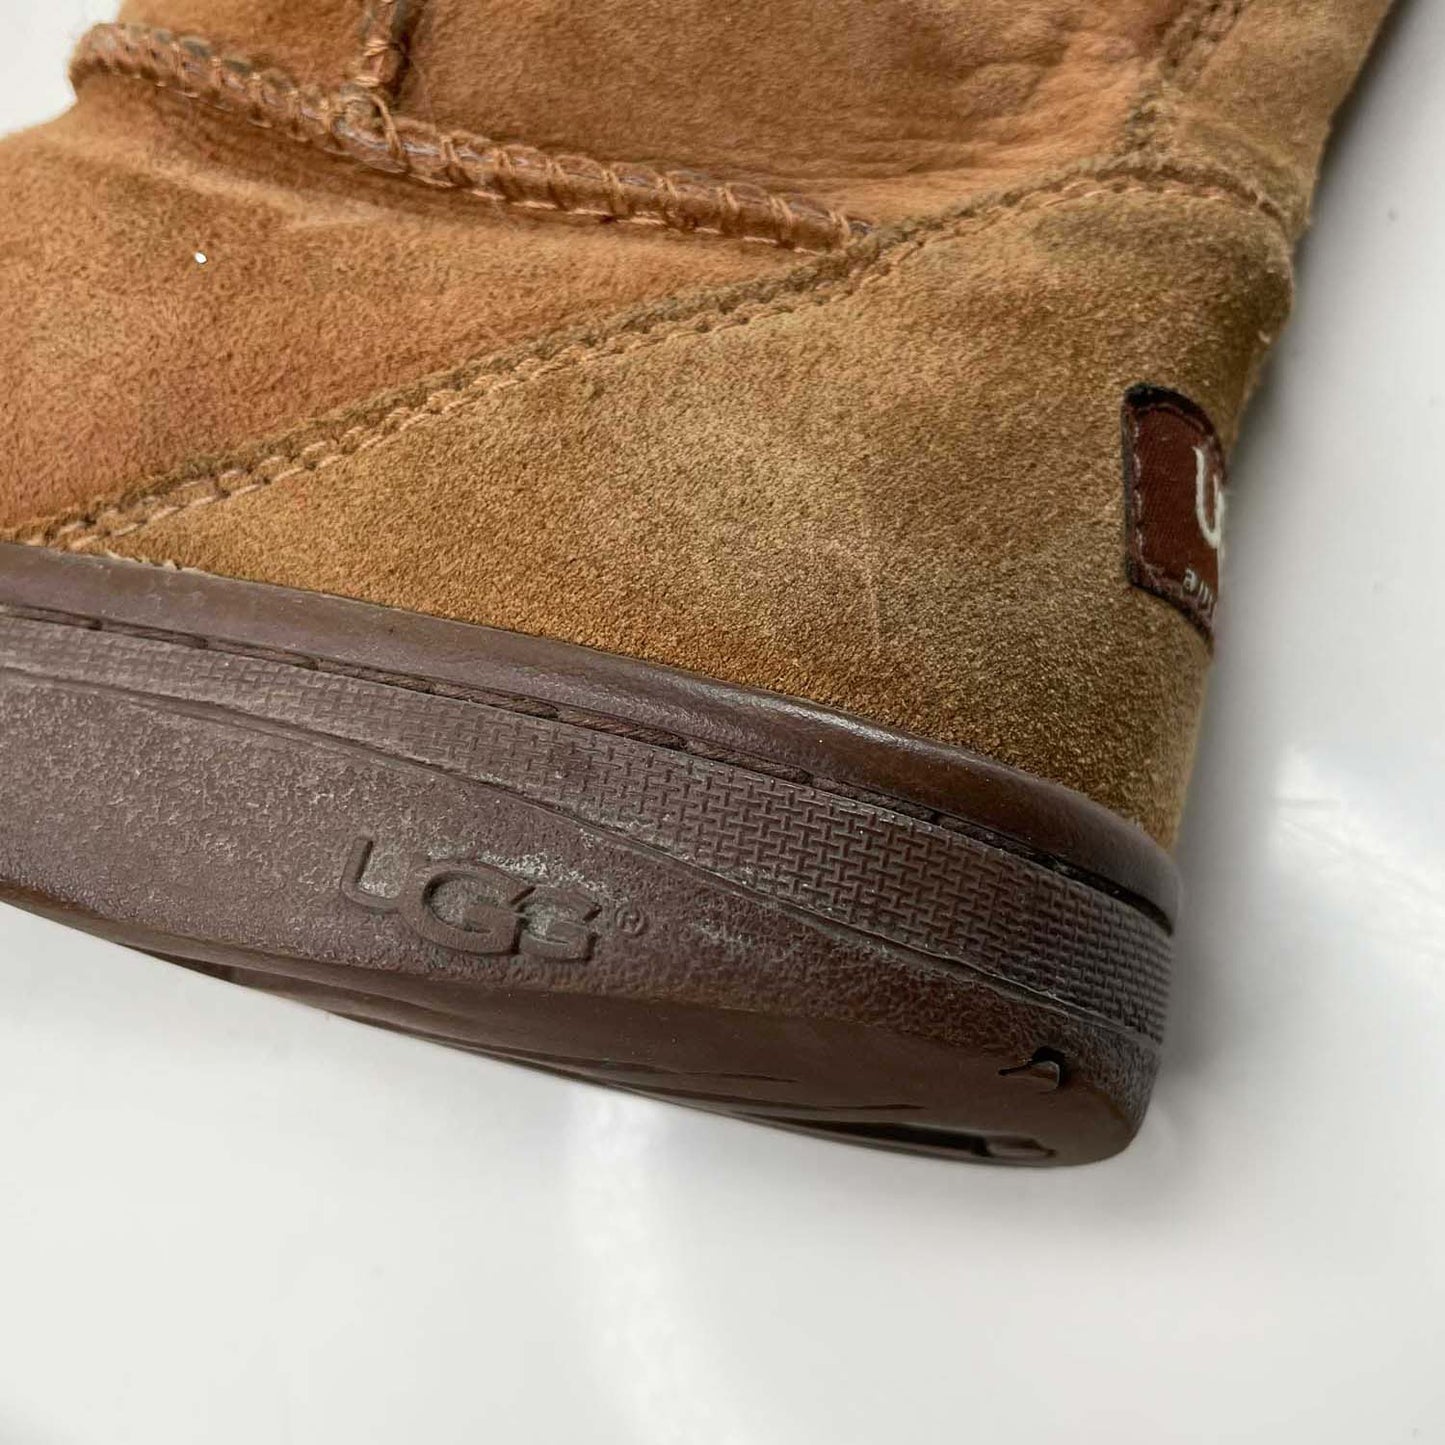 ugg natural brown ultimate sheepskin boots - size 10